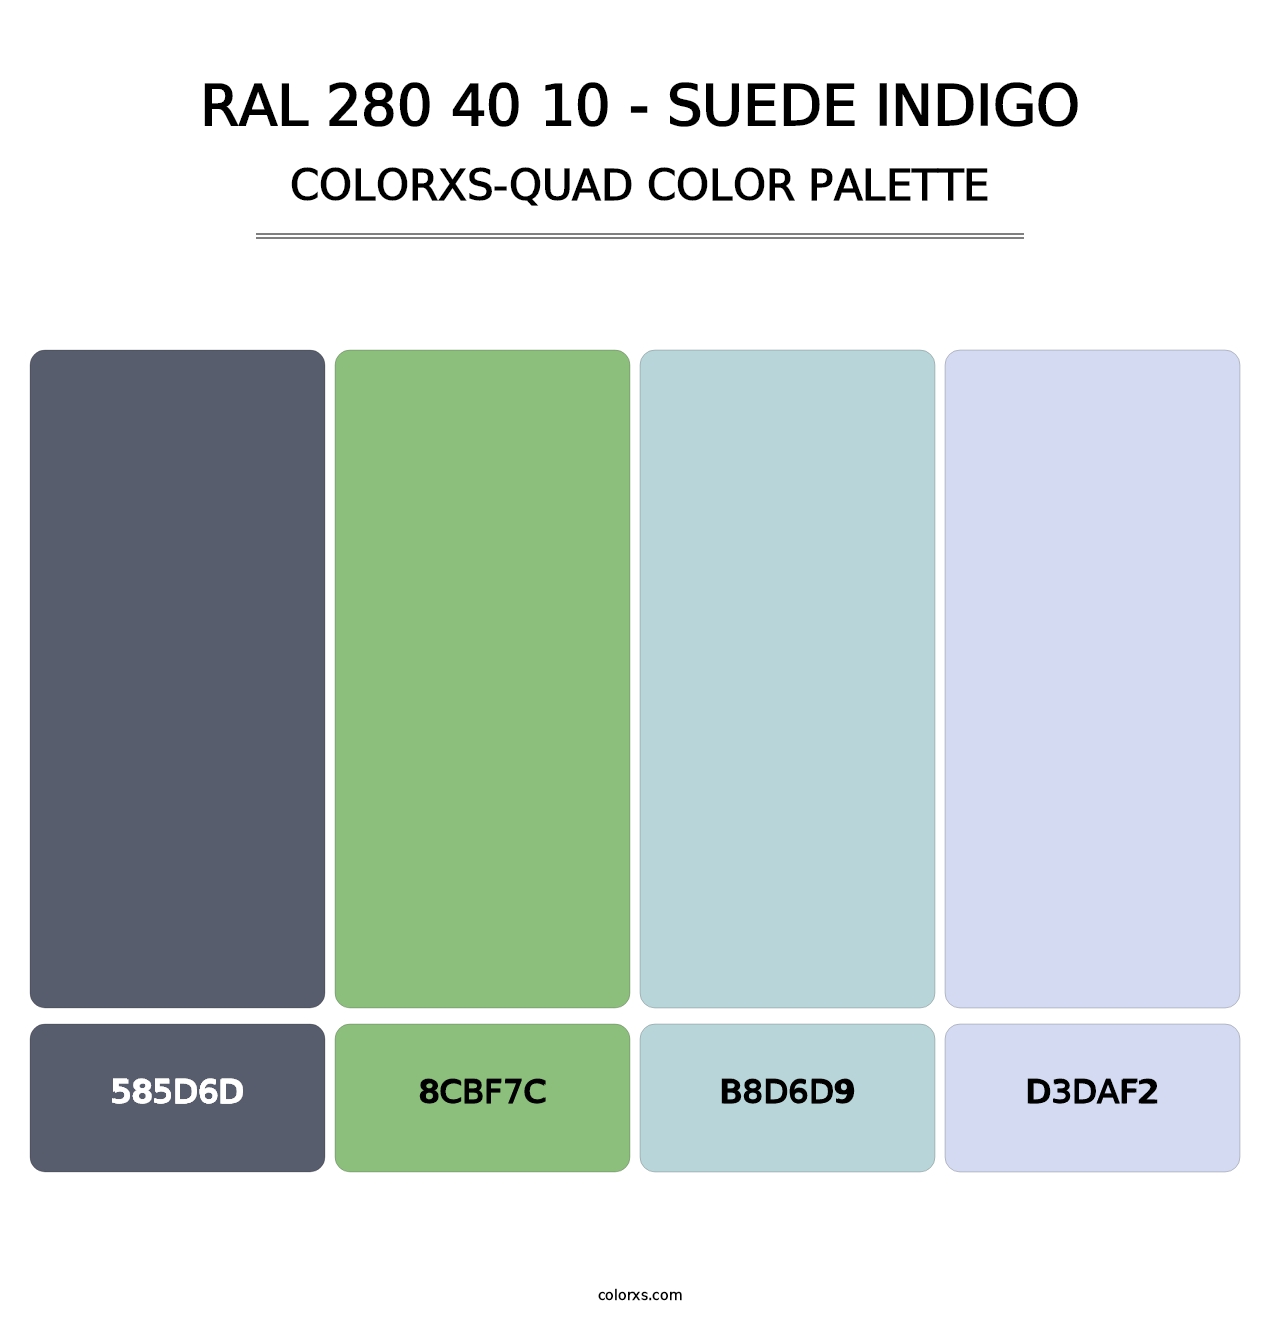 RAL 280 40 10 - Suede Indigo - Colorxs Quad Palette